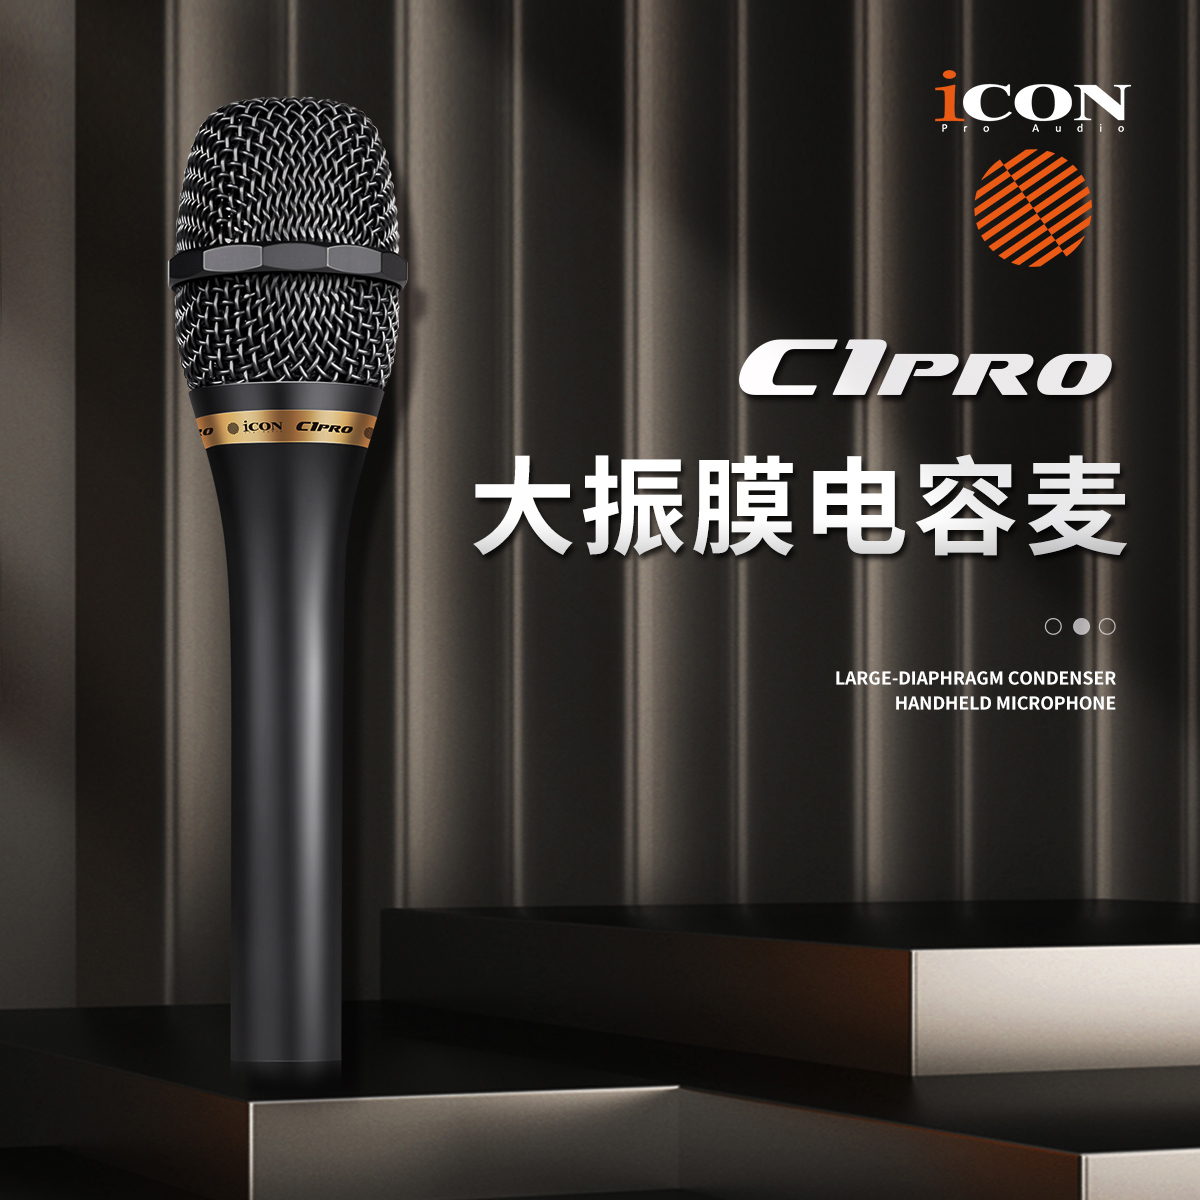 iCON艾肯 C1pro专业录音直播唱歌大振膜手持电容麦克风话筒